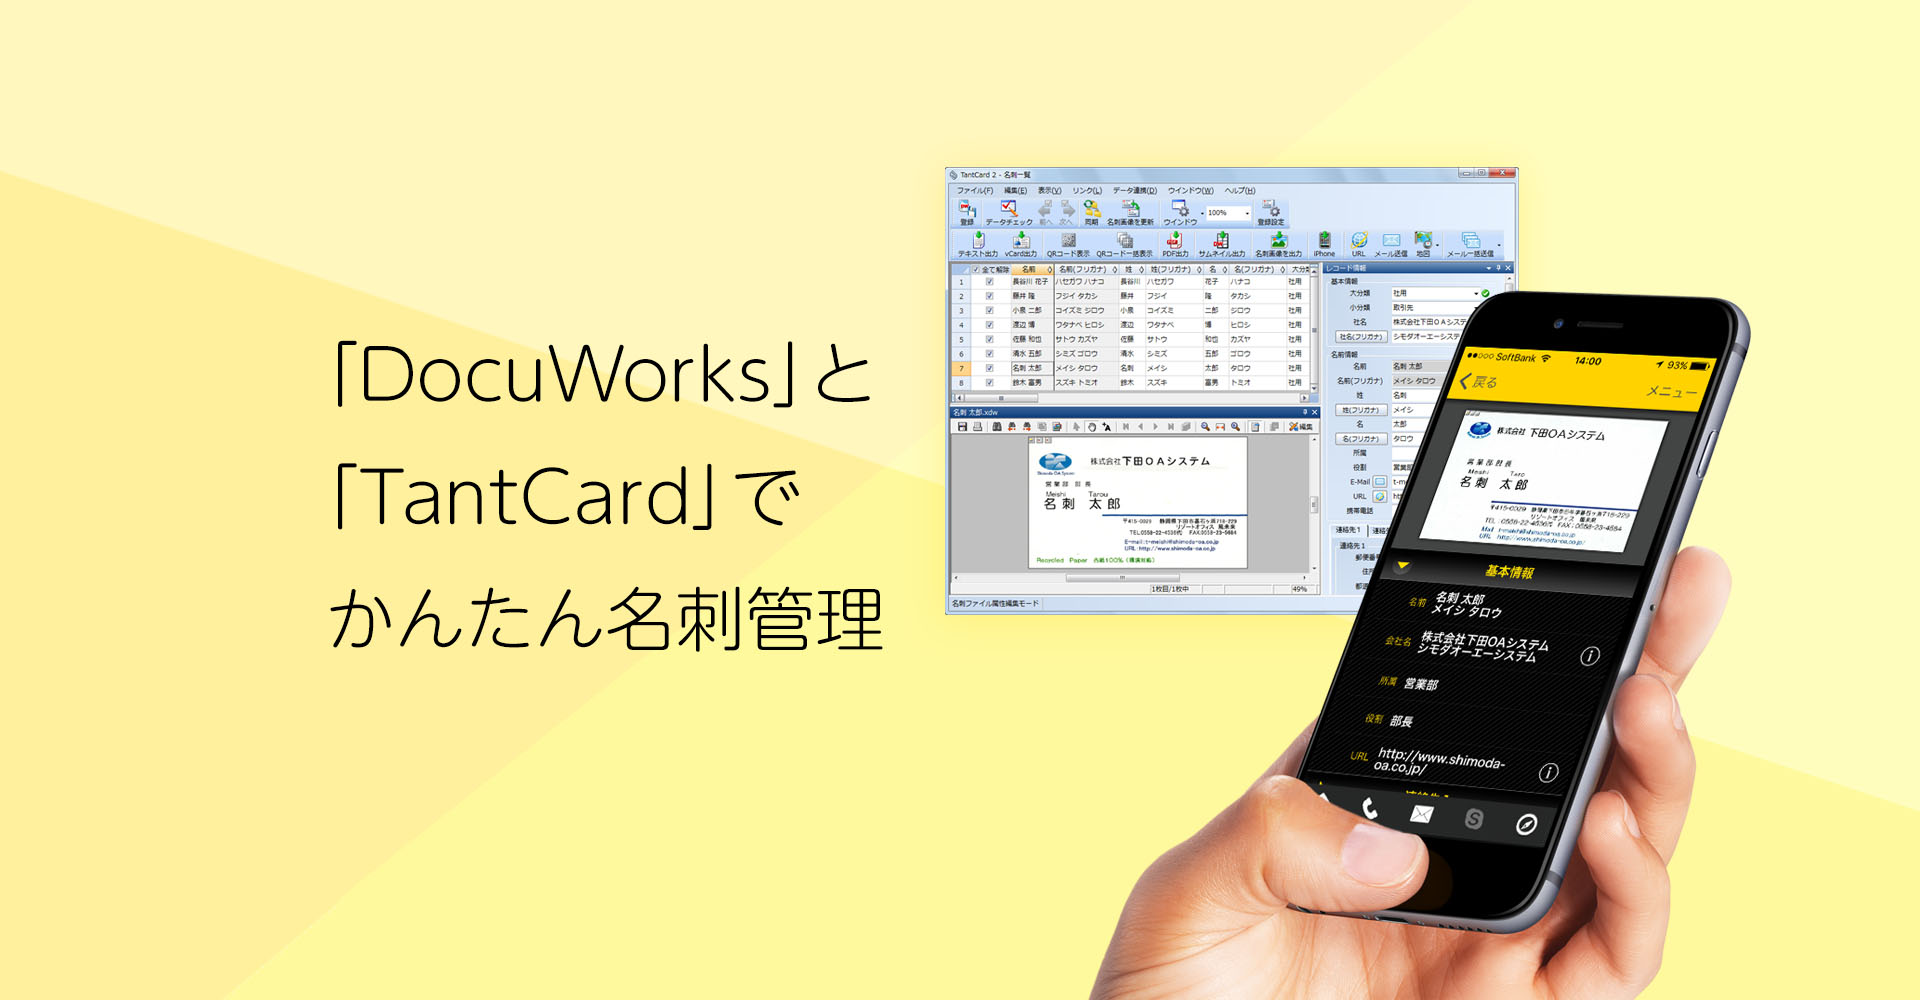 DocuWorksプラグインソフトウェア「TantCard 2」好評発売中